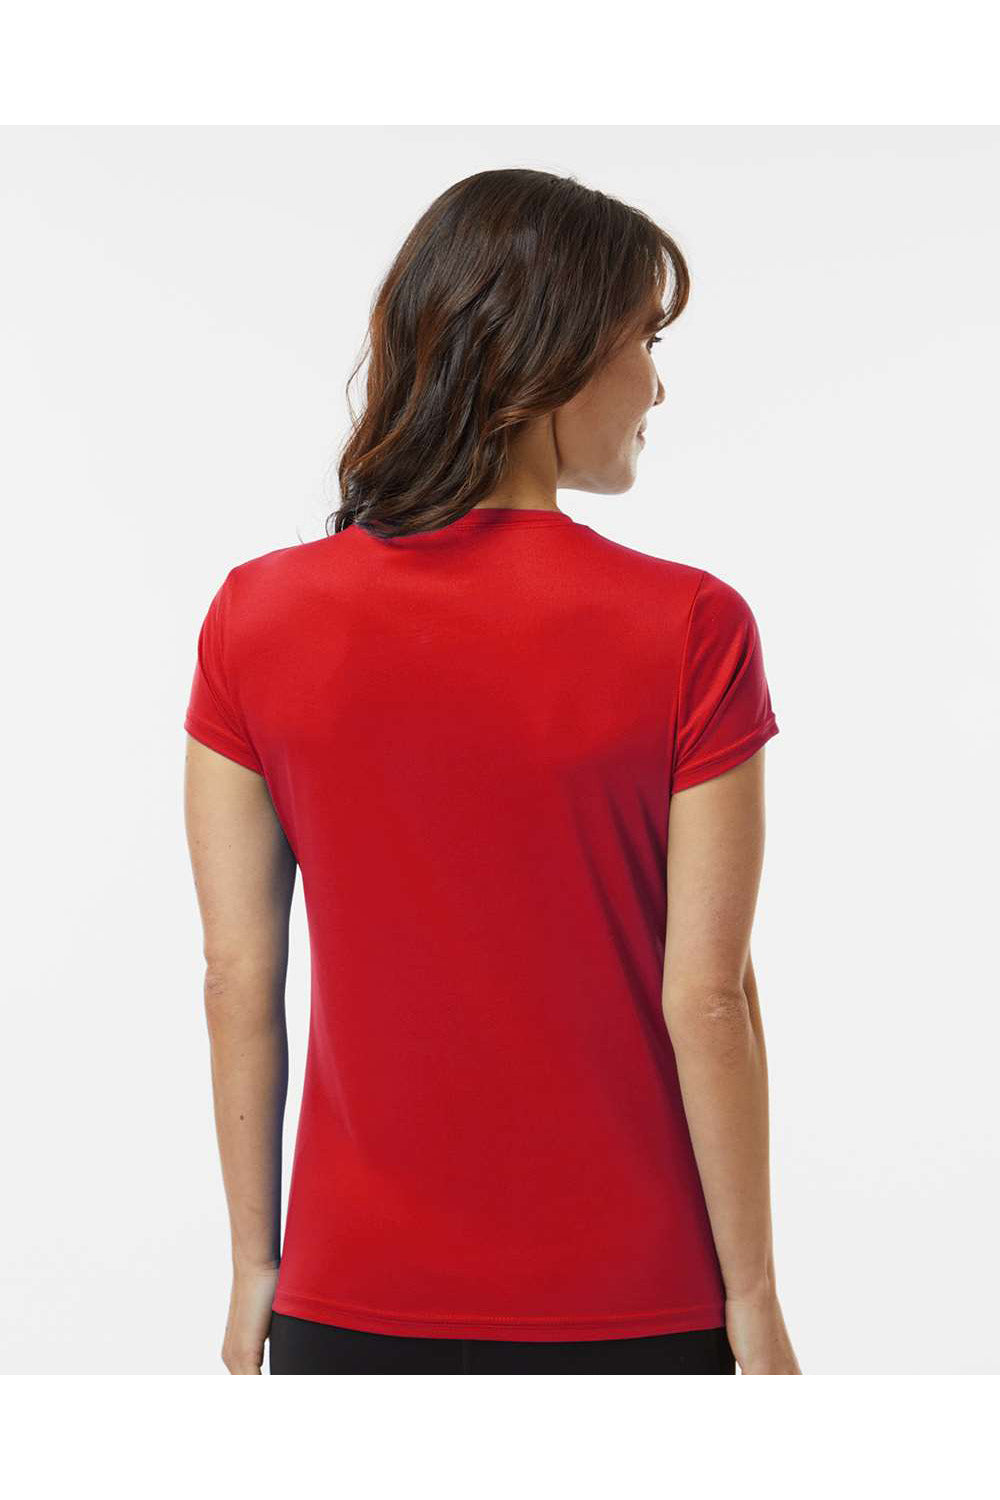 Paragon 204 Womens Islander Performance Short Sleeve Crewneck T-Shirt Red Model Back